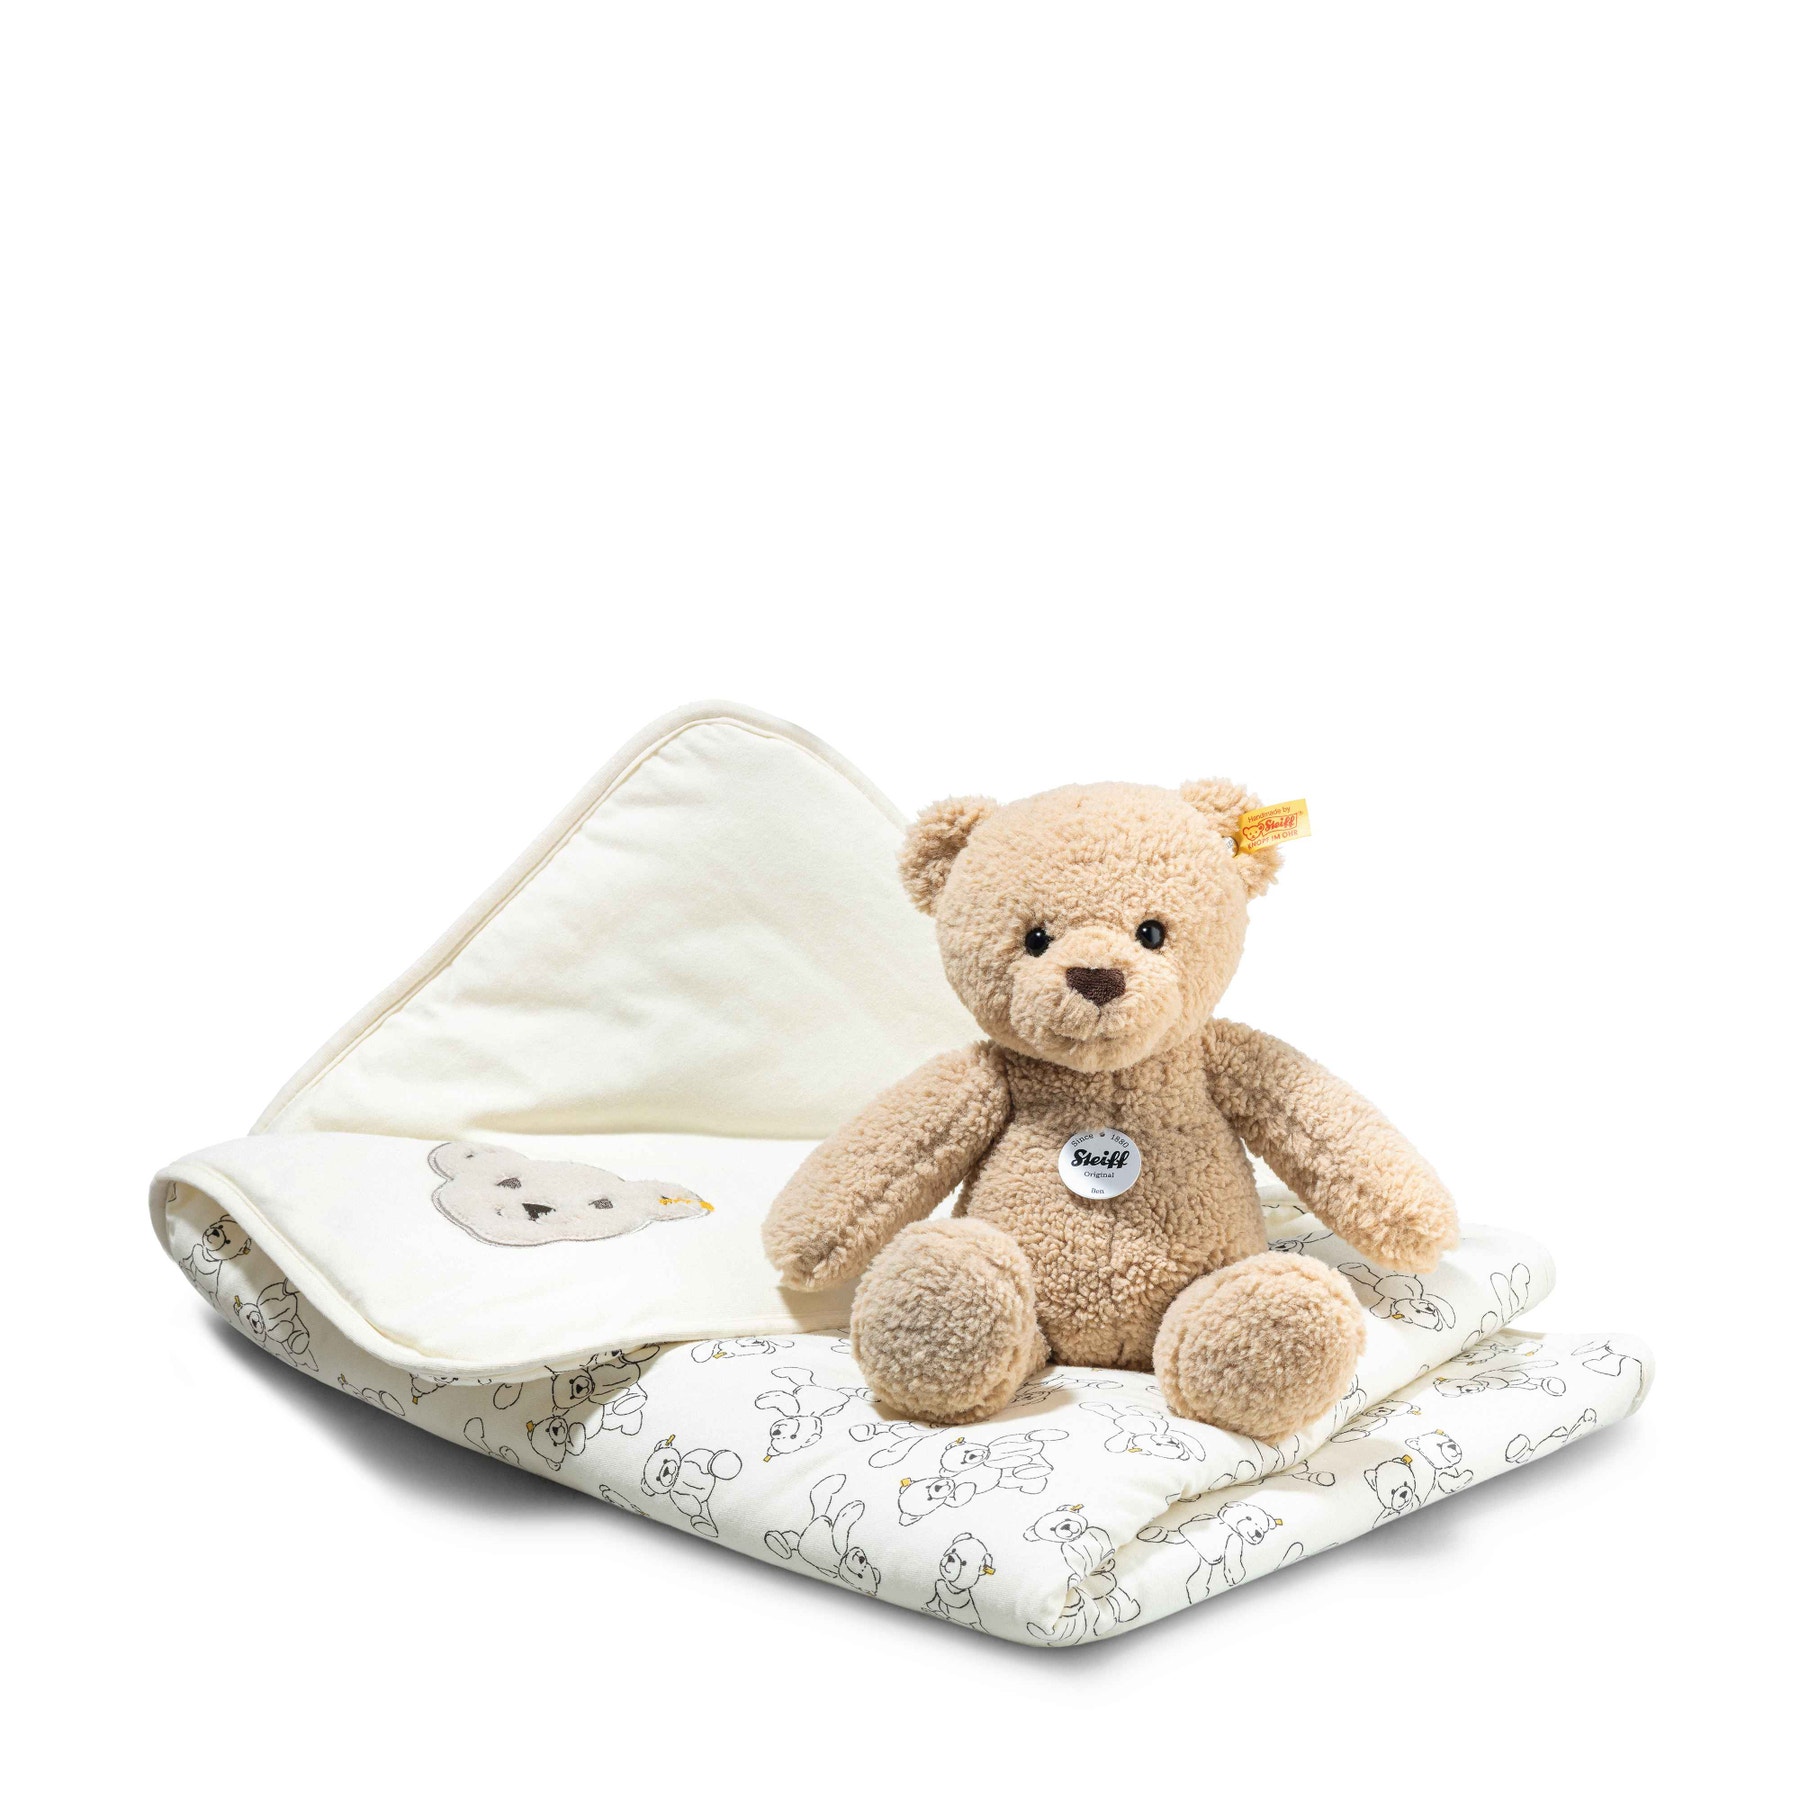 Ben Teddy bear with blanket gift set